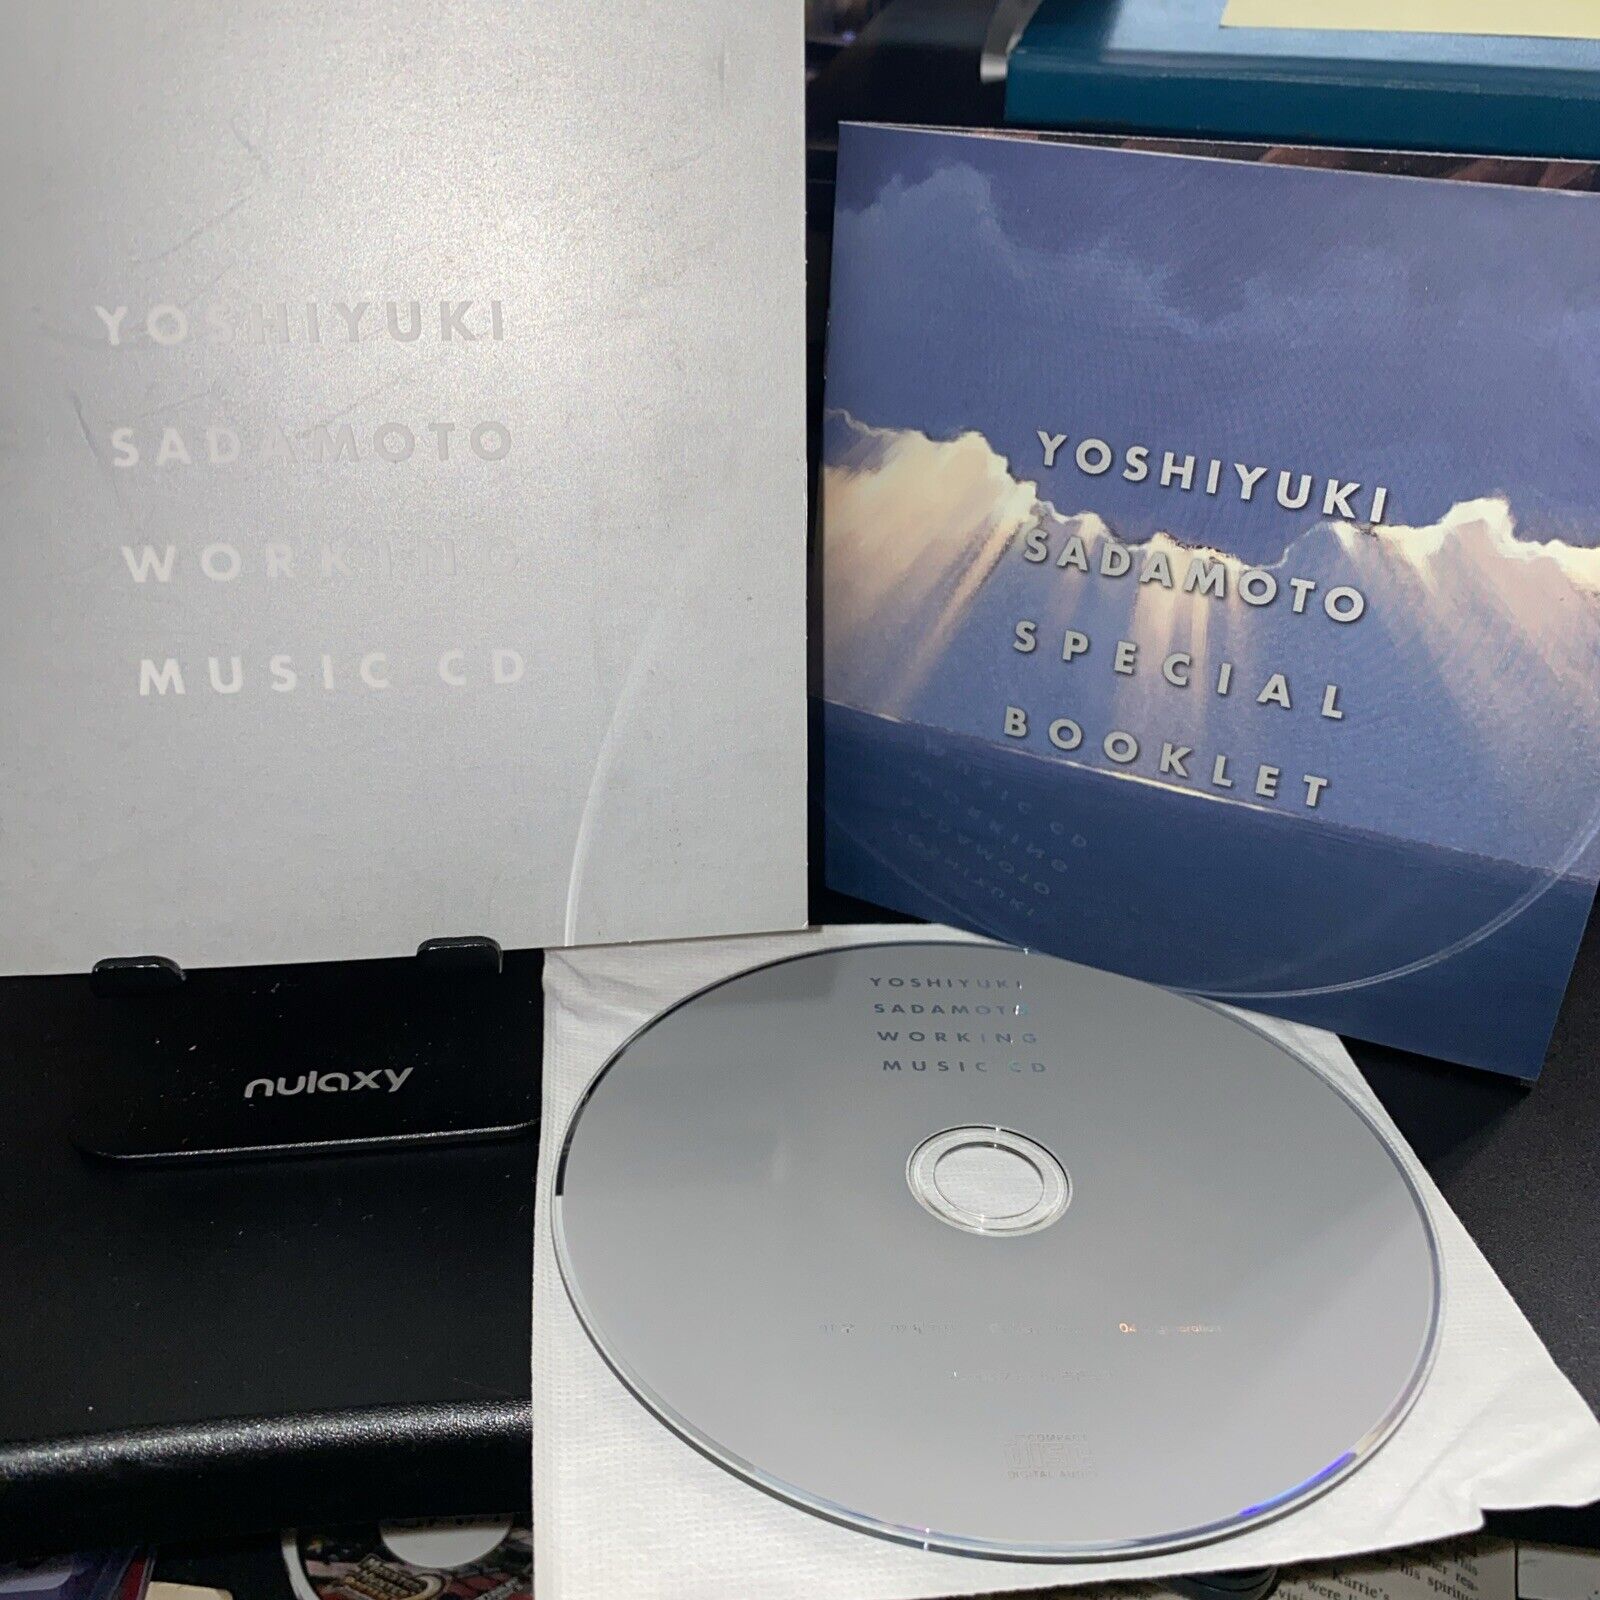 YOSHIYUKI SADAMOTO Evangelion Special Booklet & Music CD Art Set Book 2014 Ltd